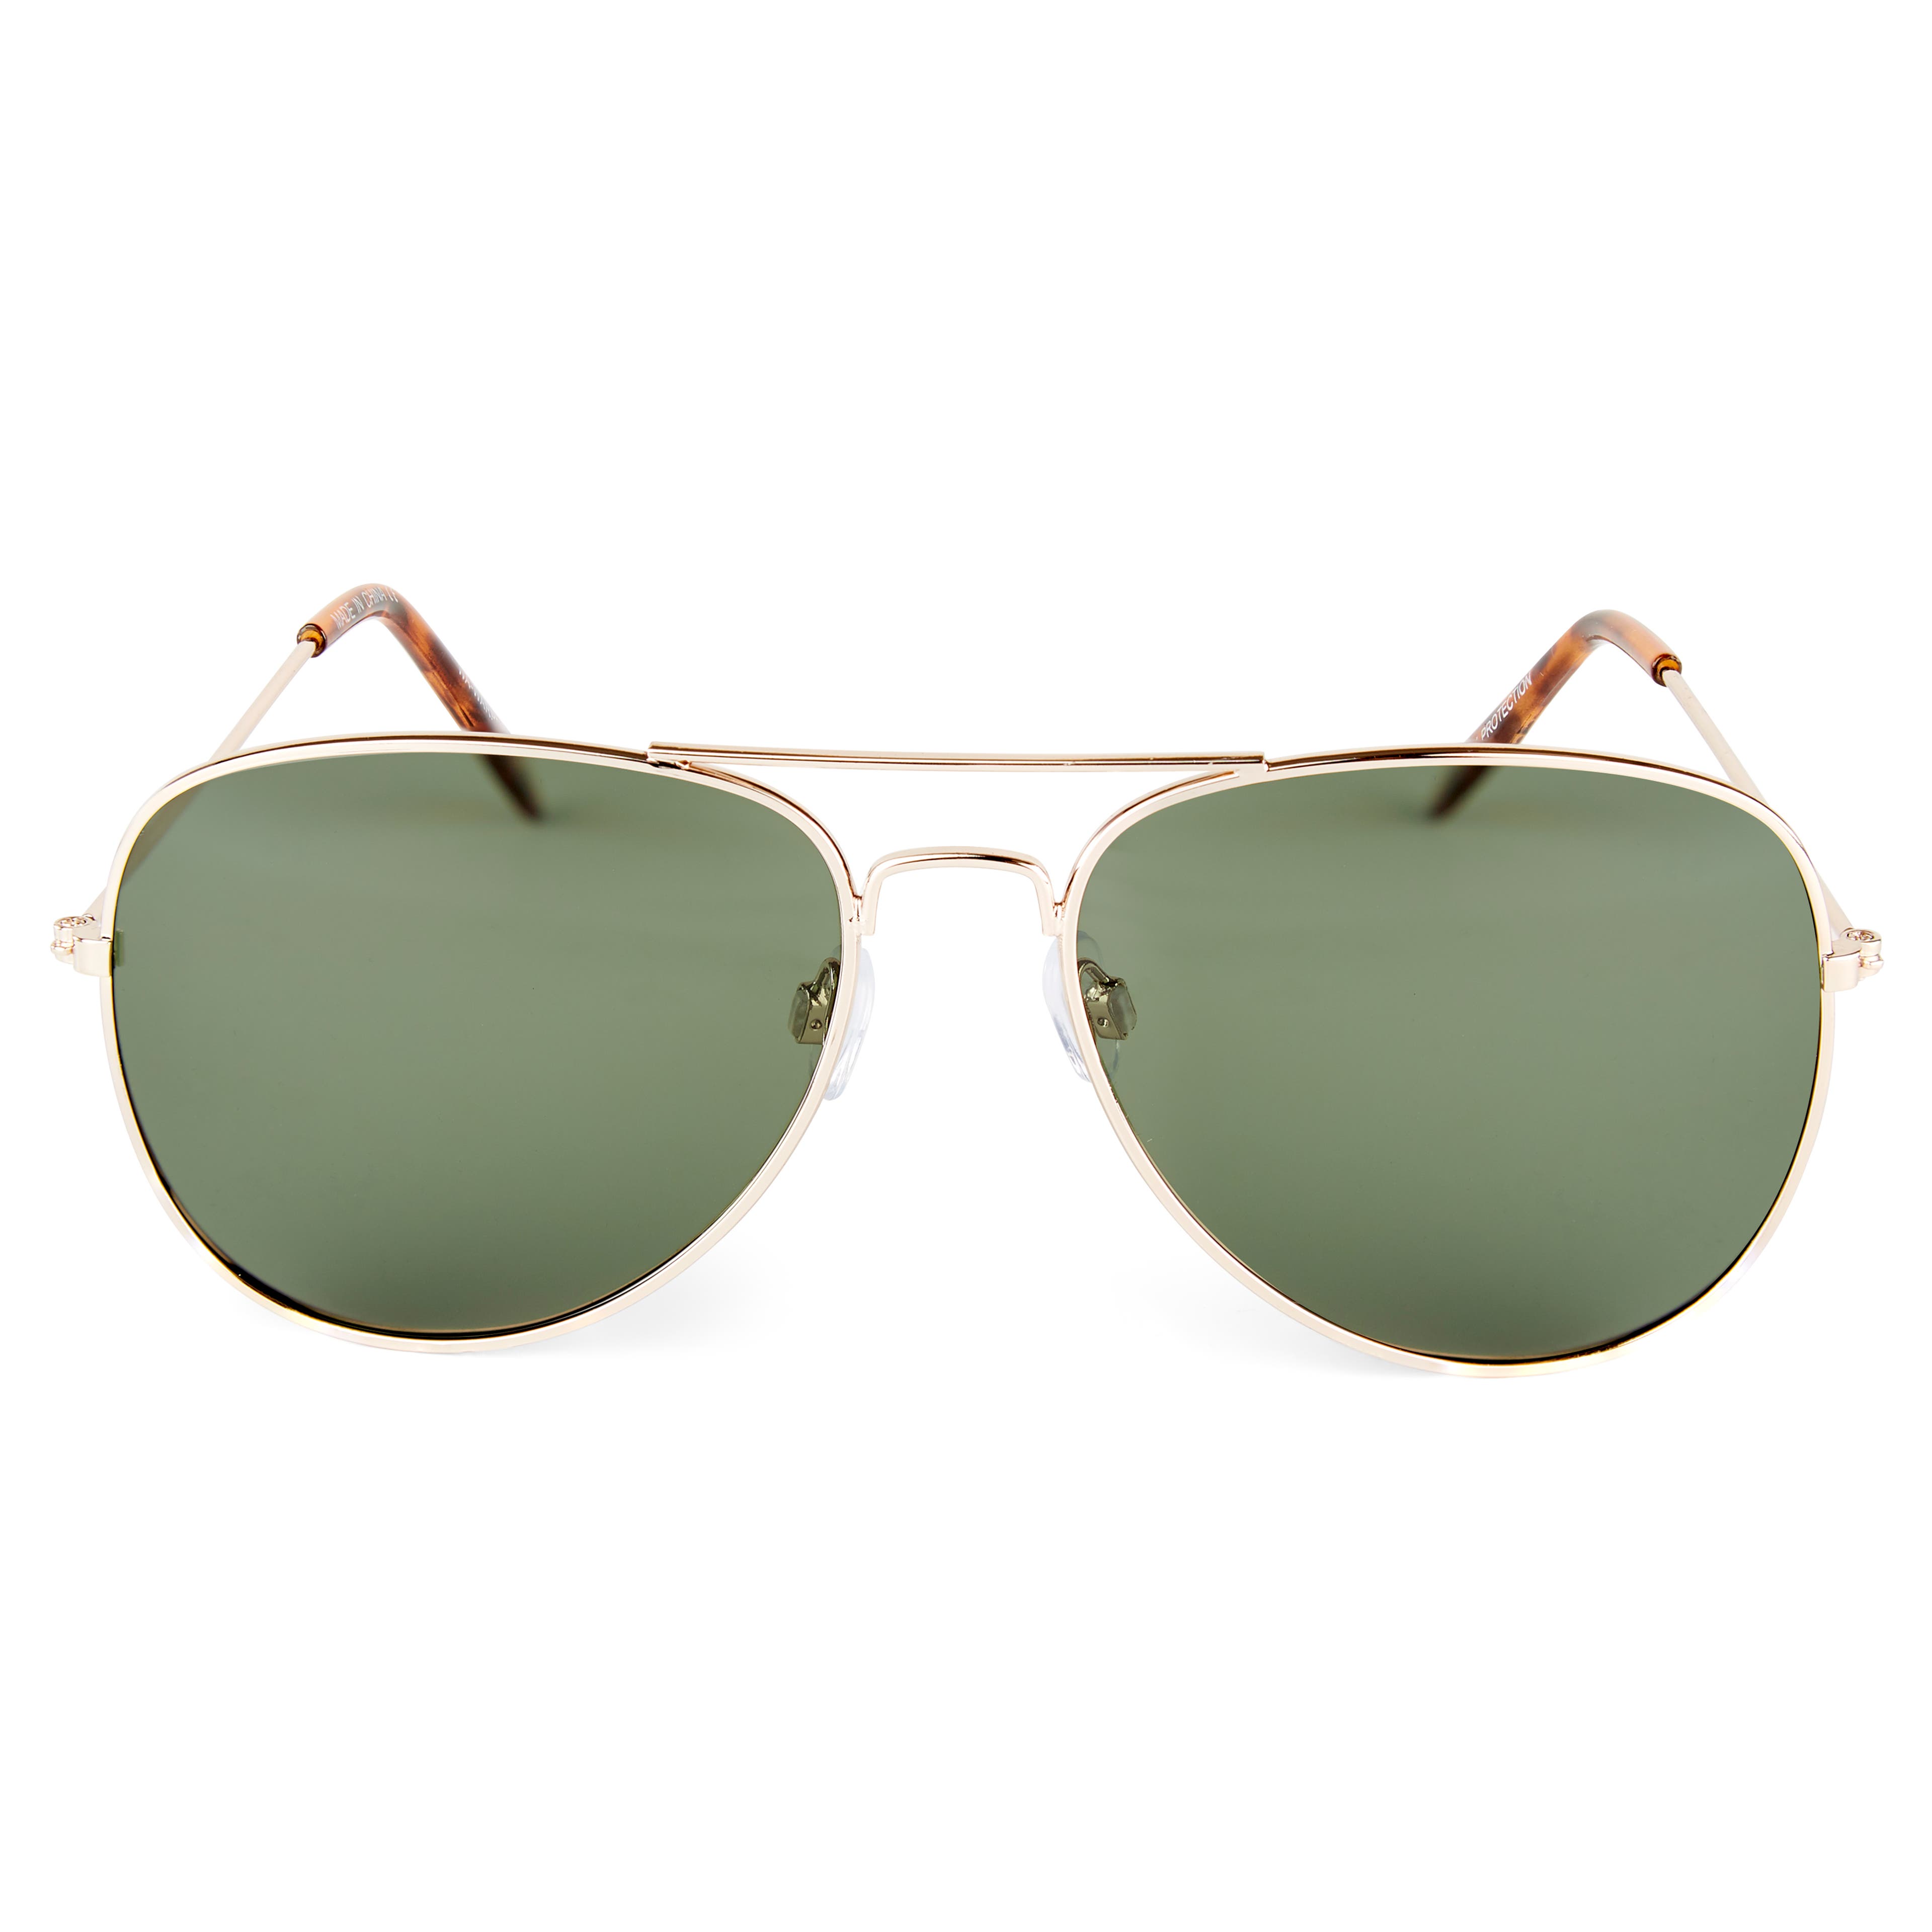 Vista | Gold-Tone & Olive Green Aviator Sunglasses